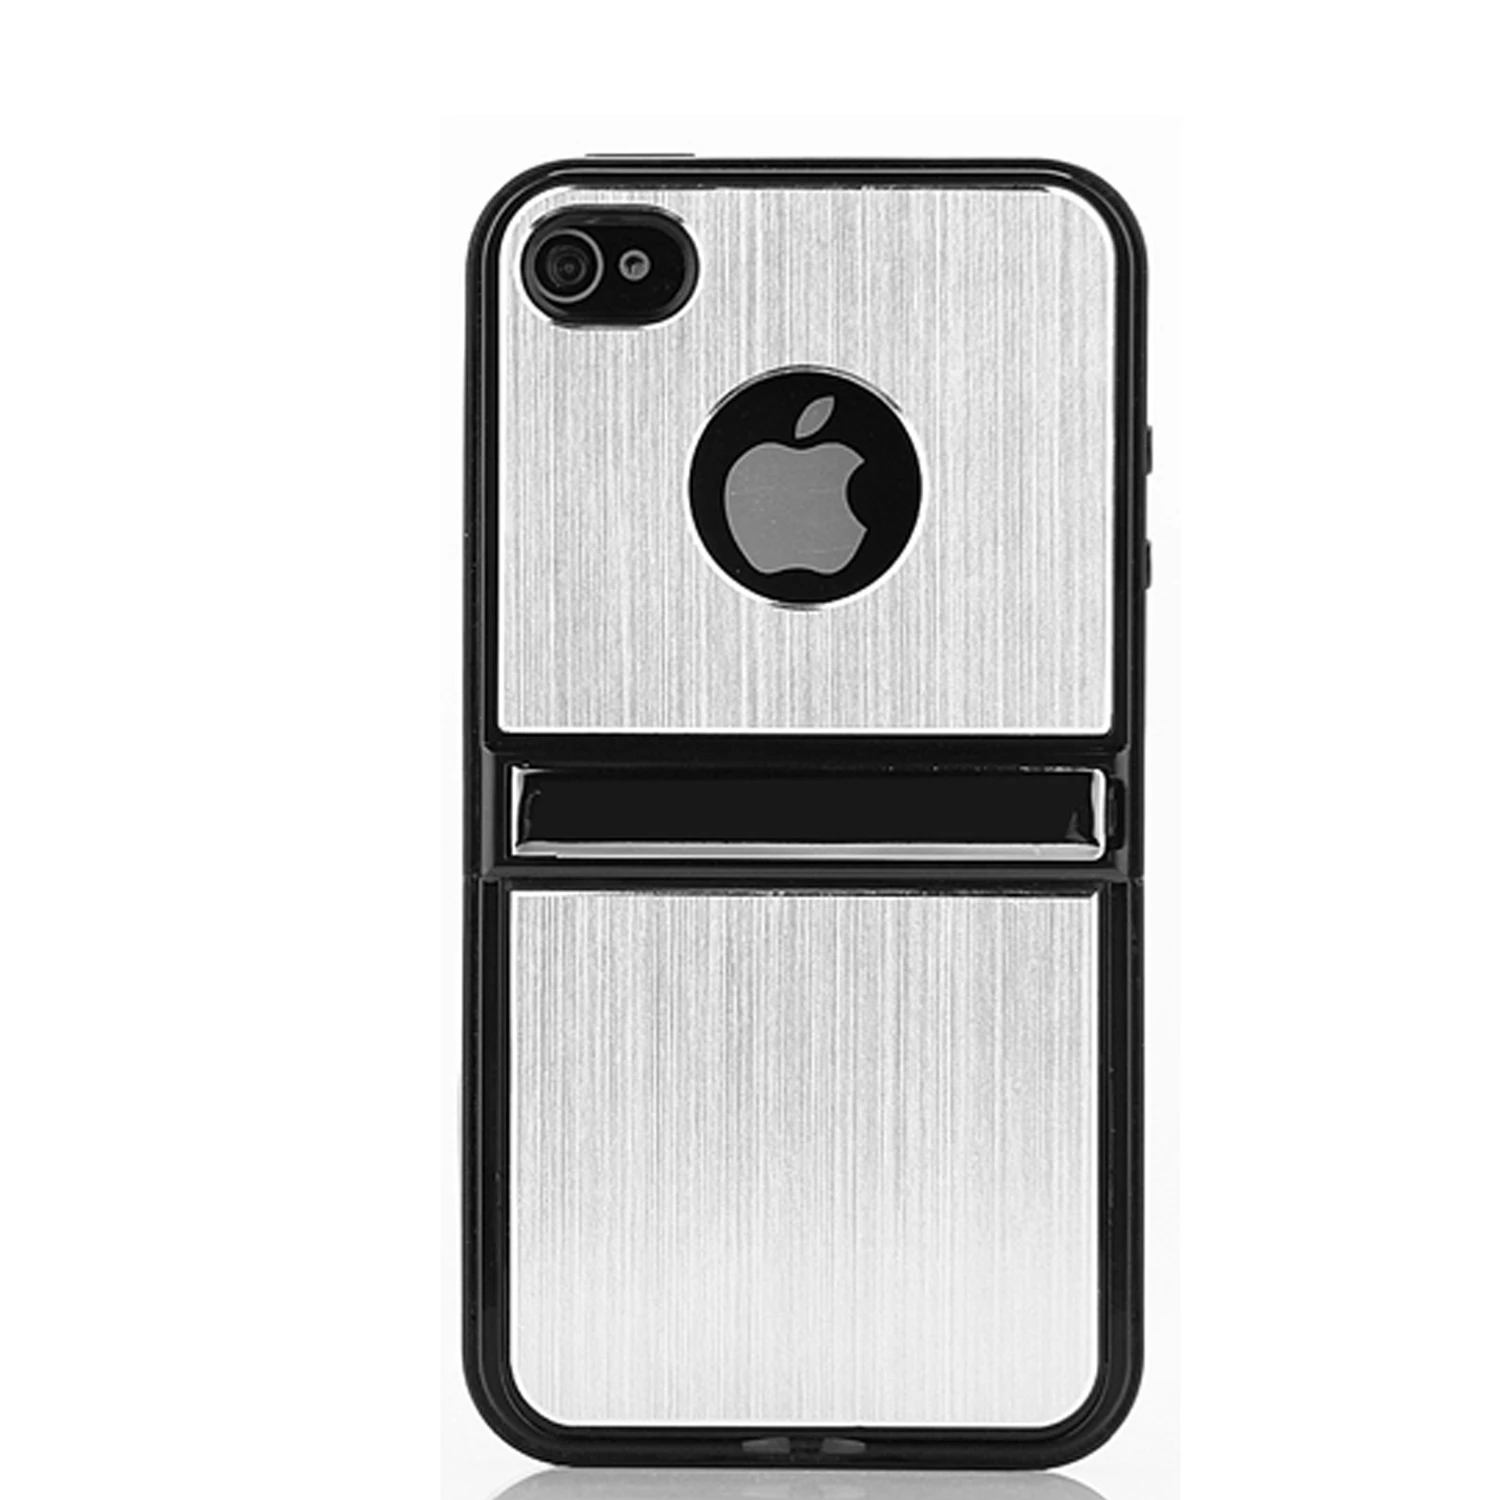 Aluminum TPU Hard Case Cover For iPhone 5